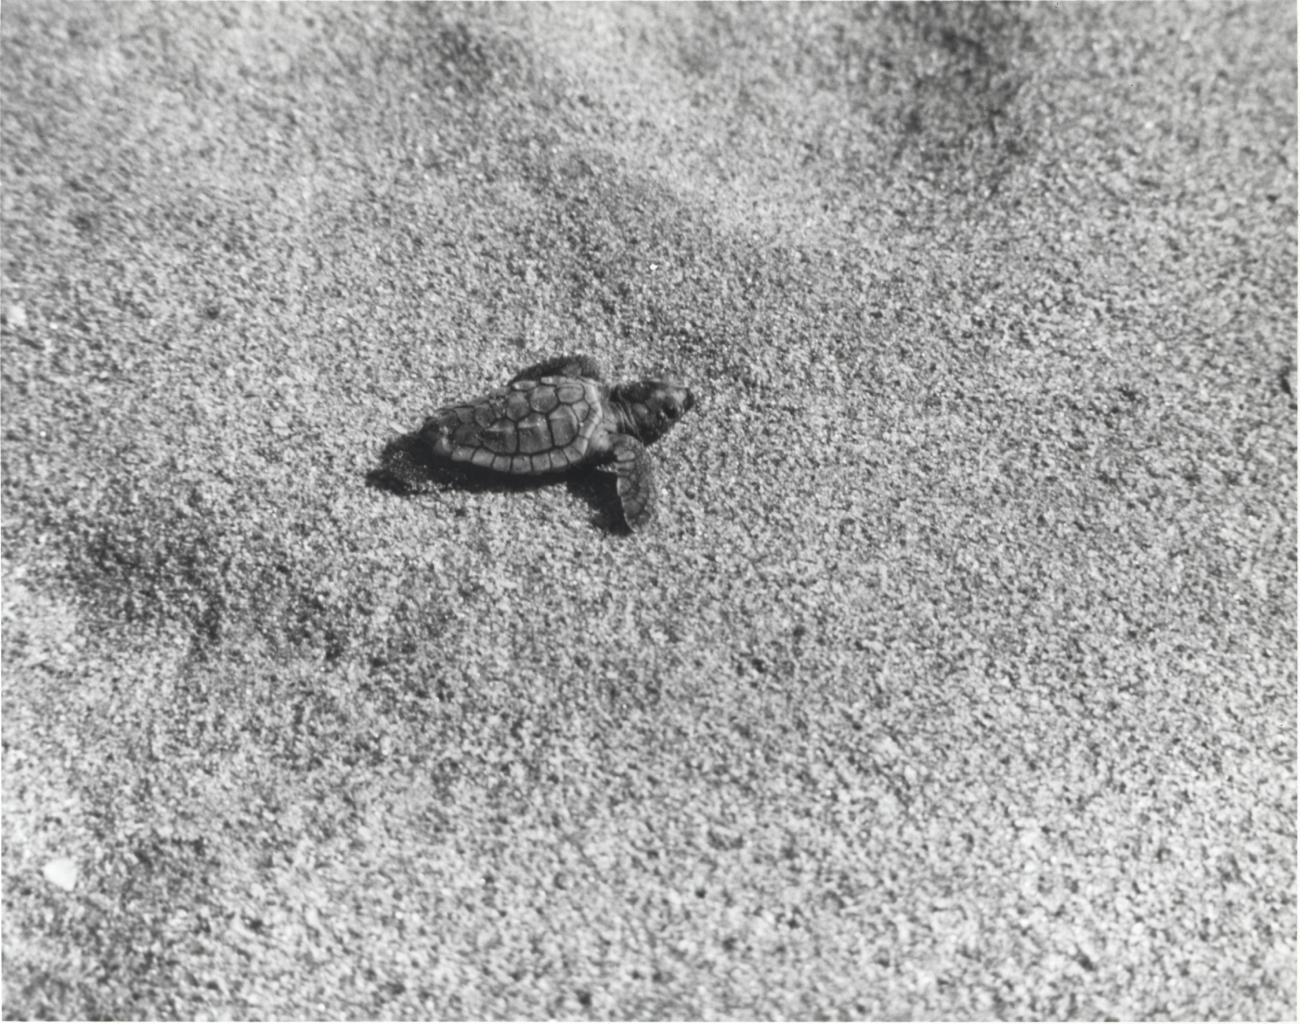 8-hour old loggerhead turtle making its way to the sea